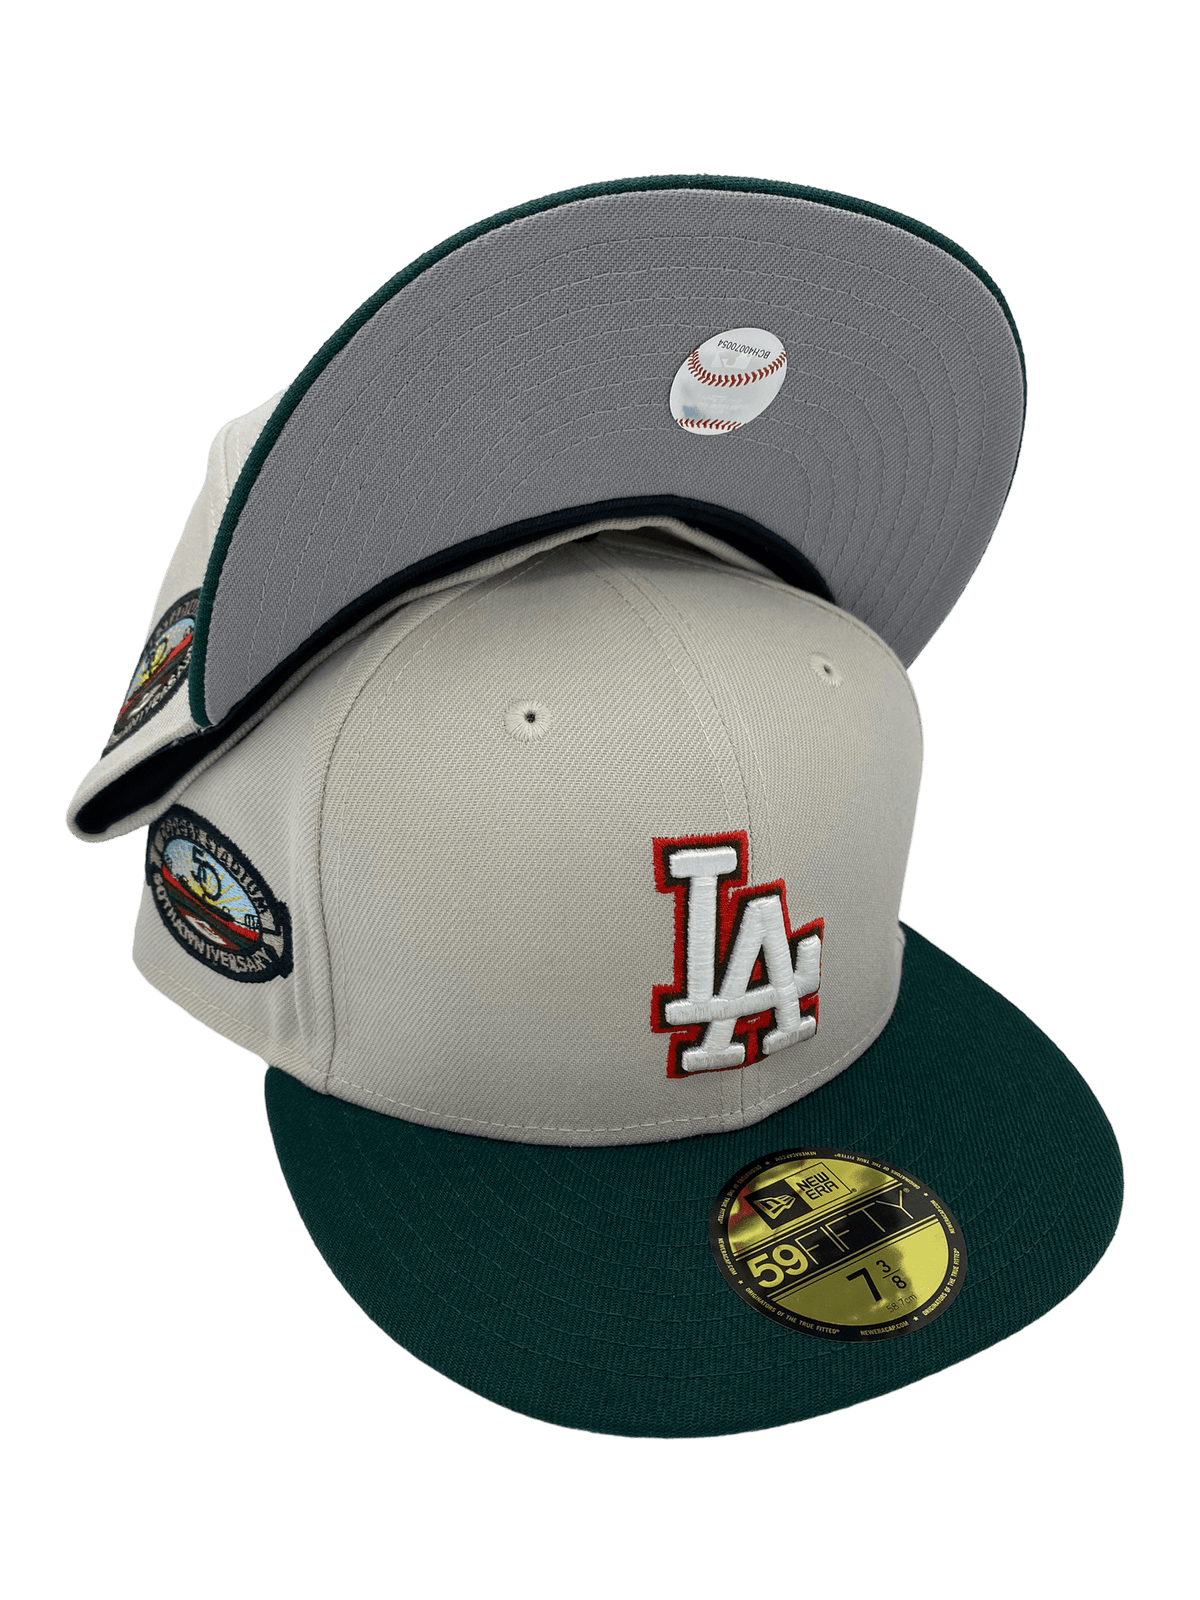 Men's New Era Stone/Black Atlanta Braves Chrome 59FIFTY Fitted Hat